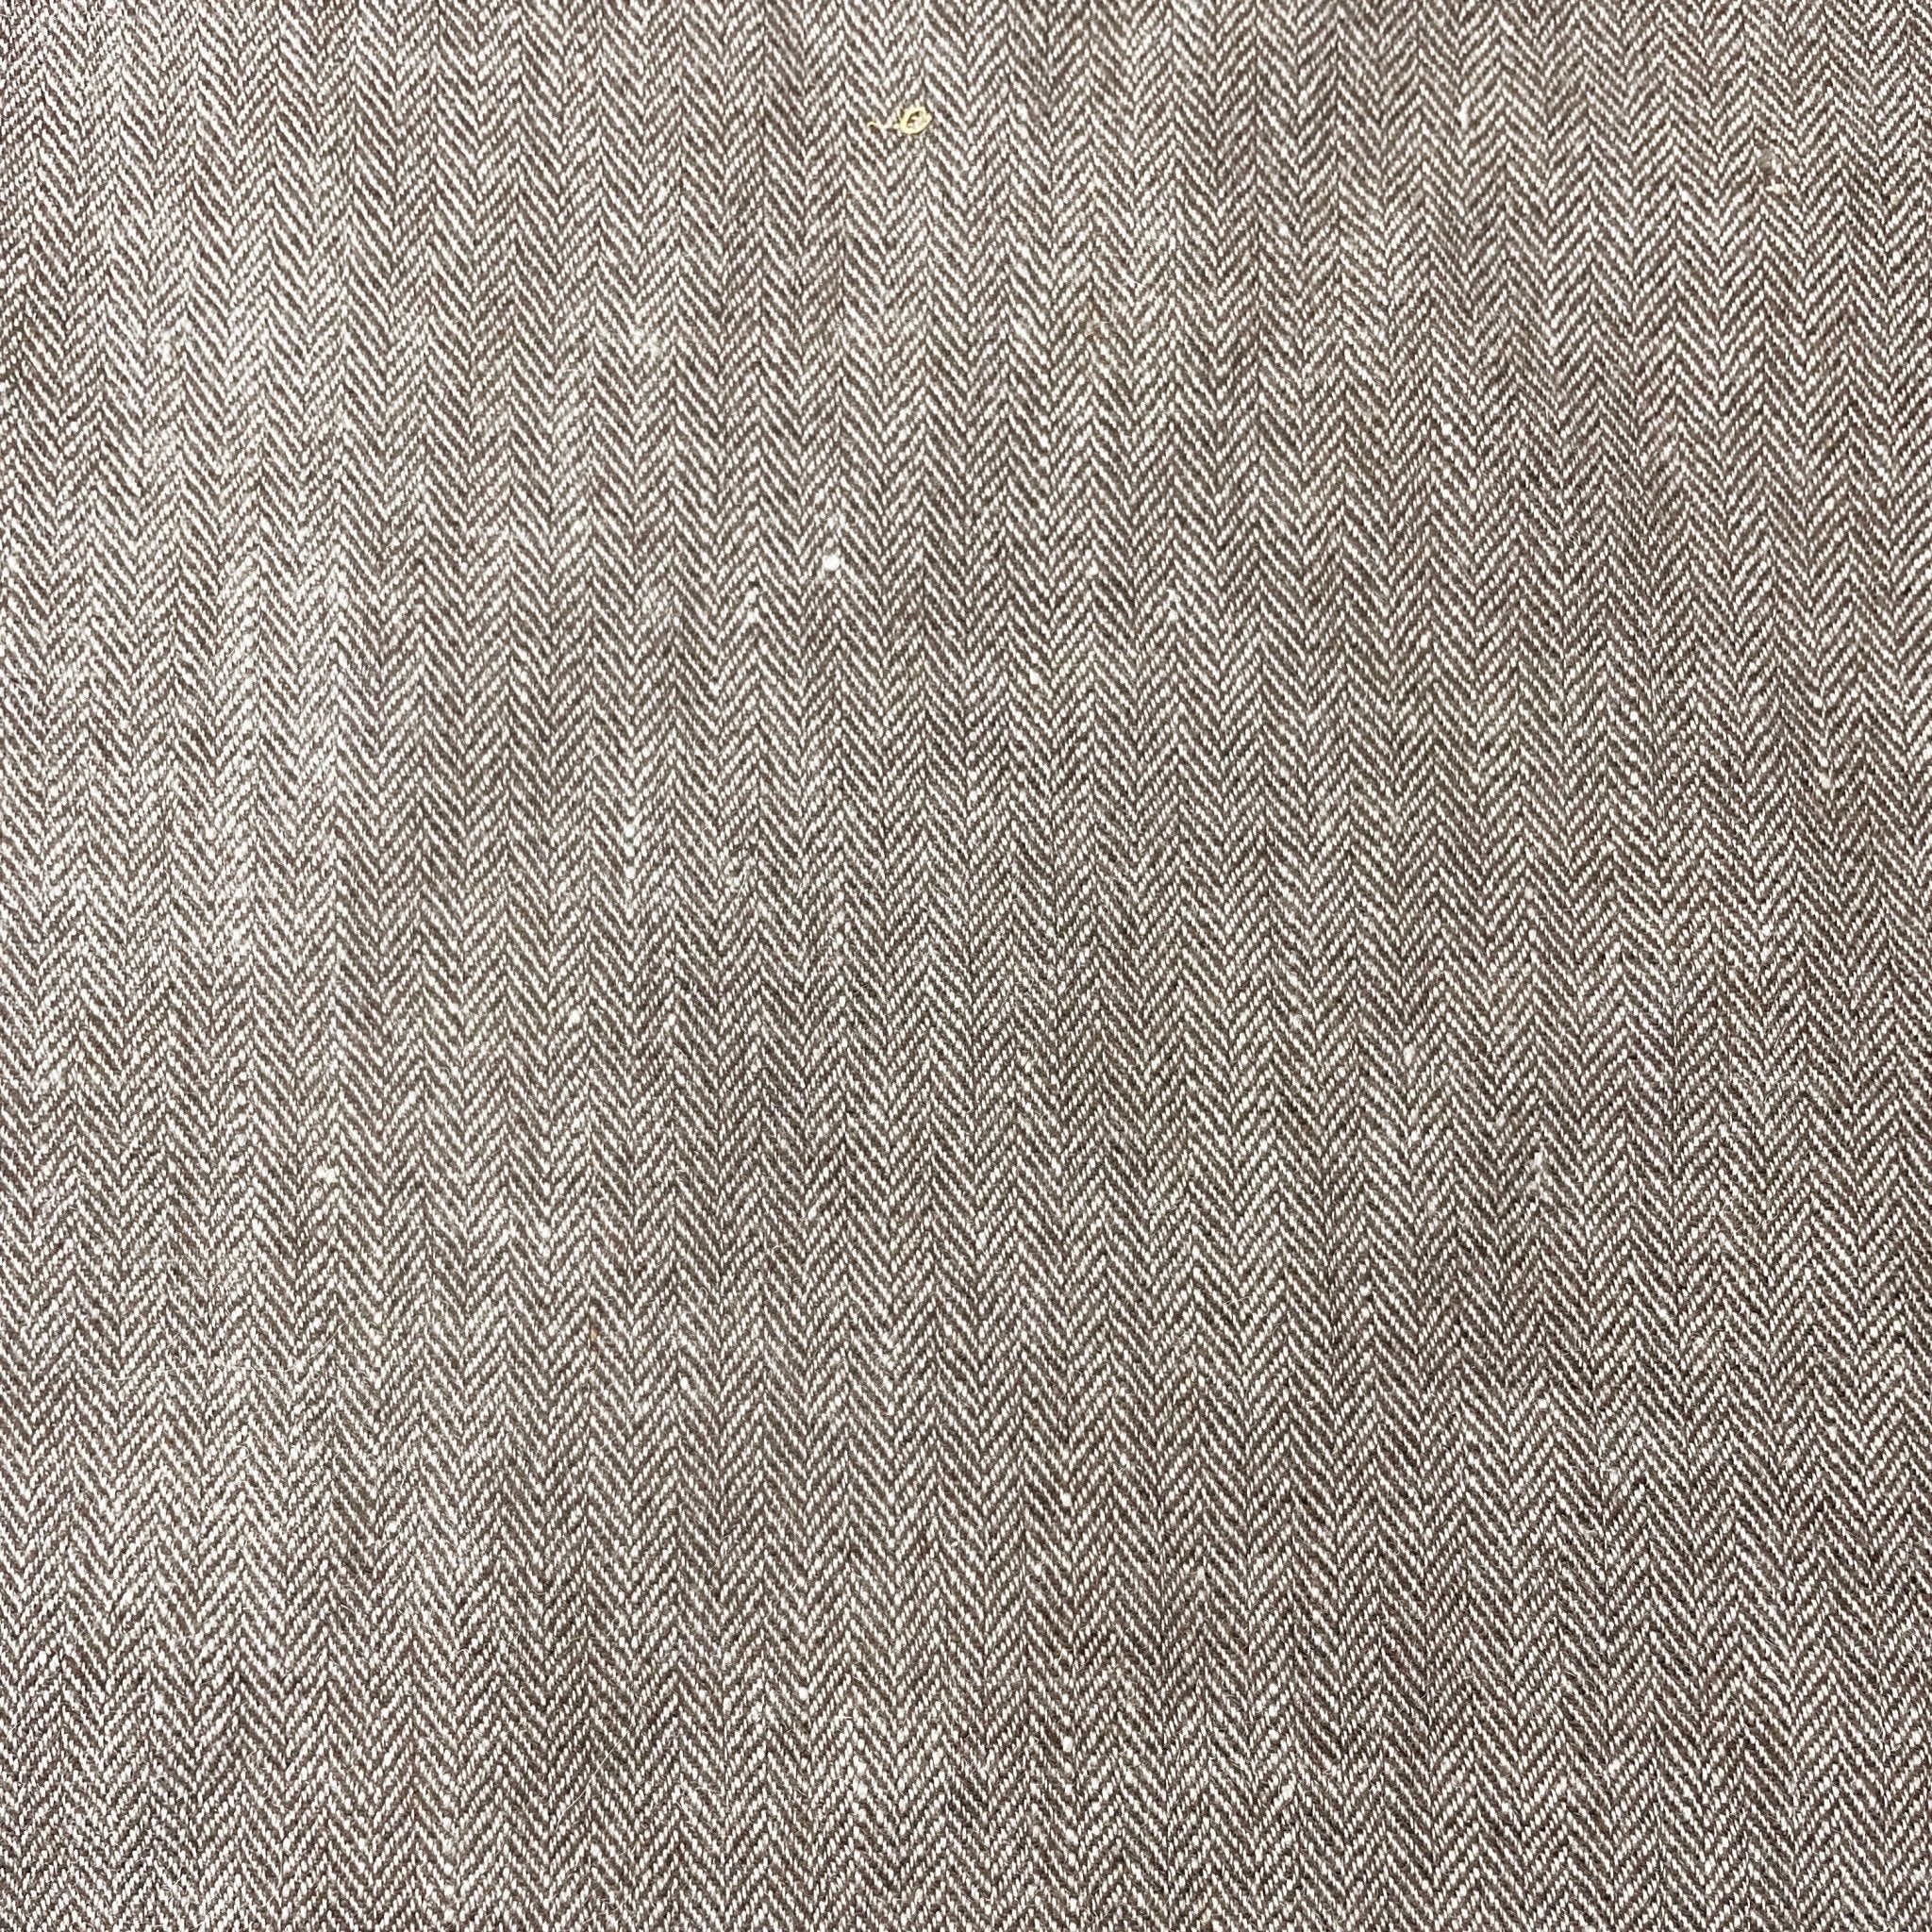 Linen Nylon Wool HBT Fabric 7009 7004 7013 7010 - The Linen Lab - 7004 D/BROWN